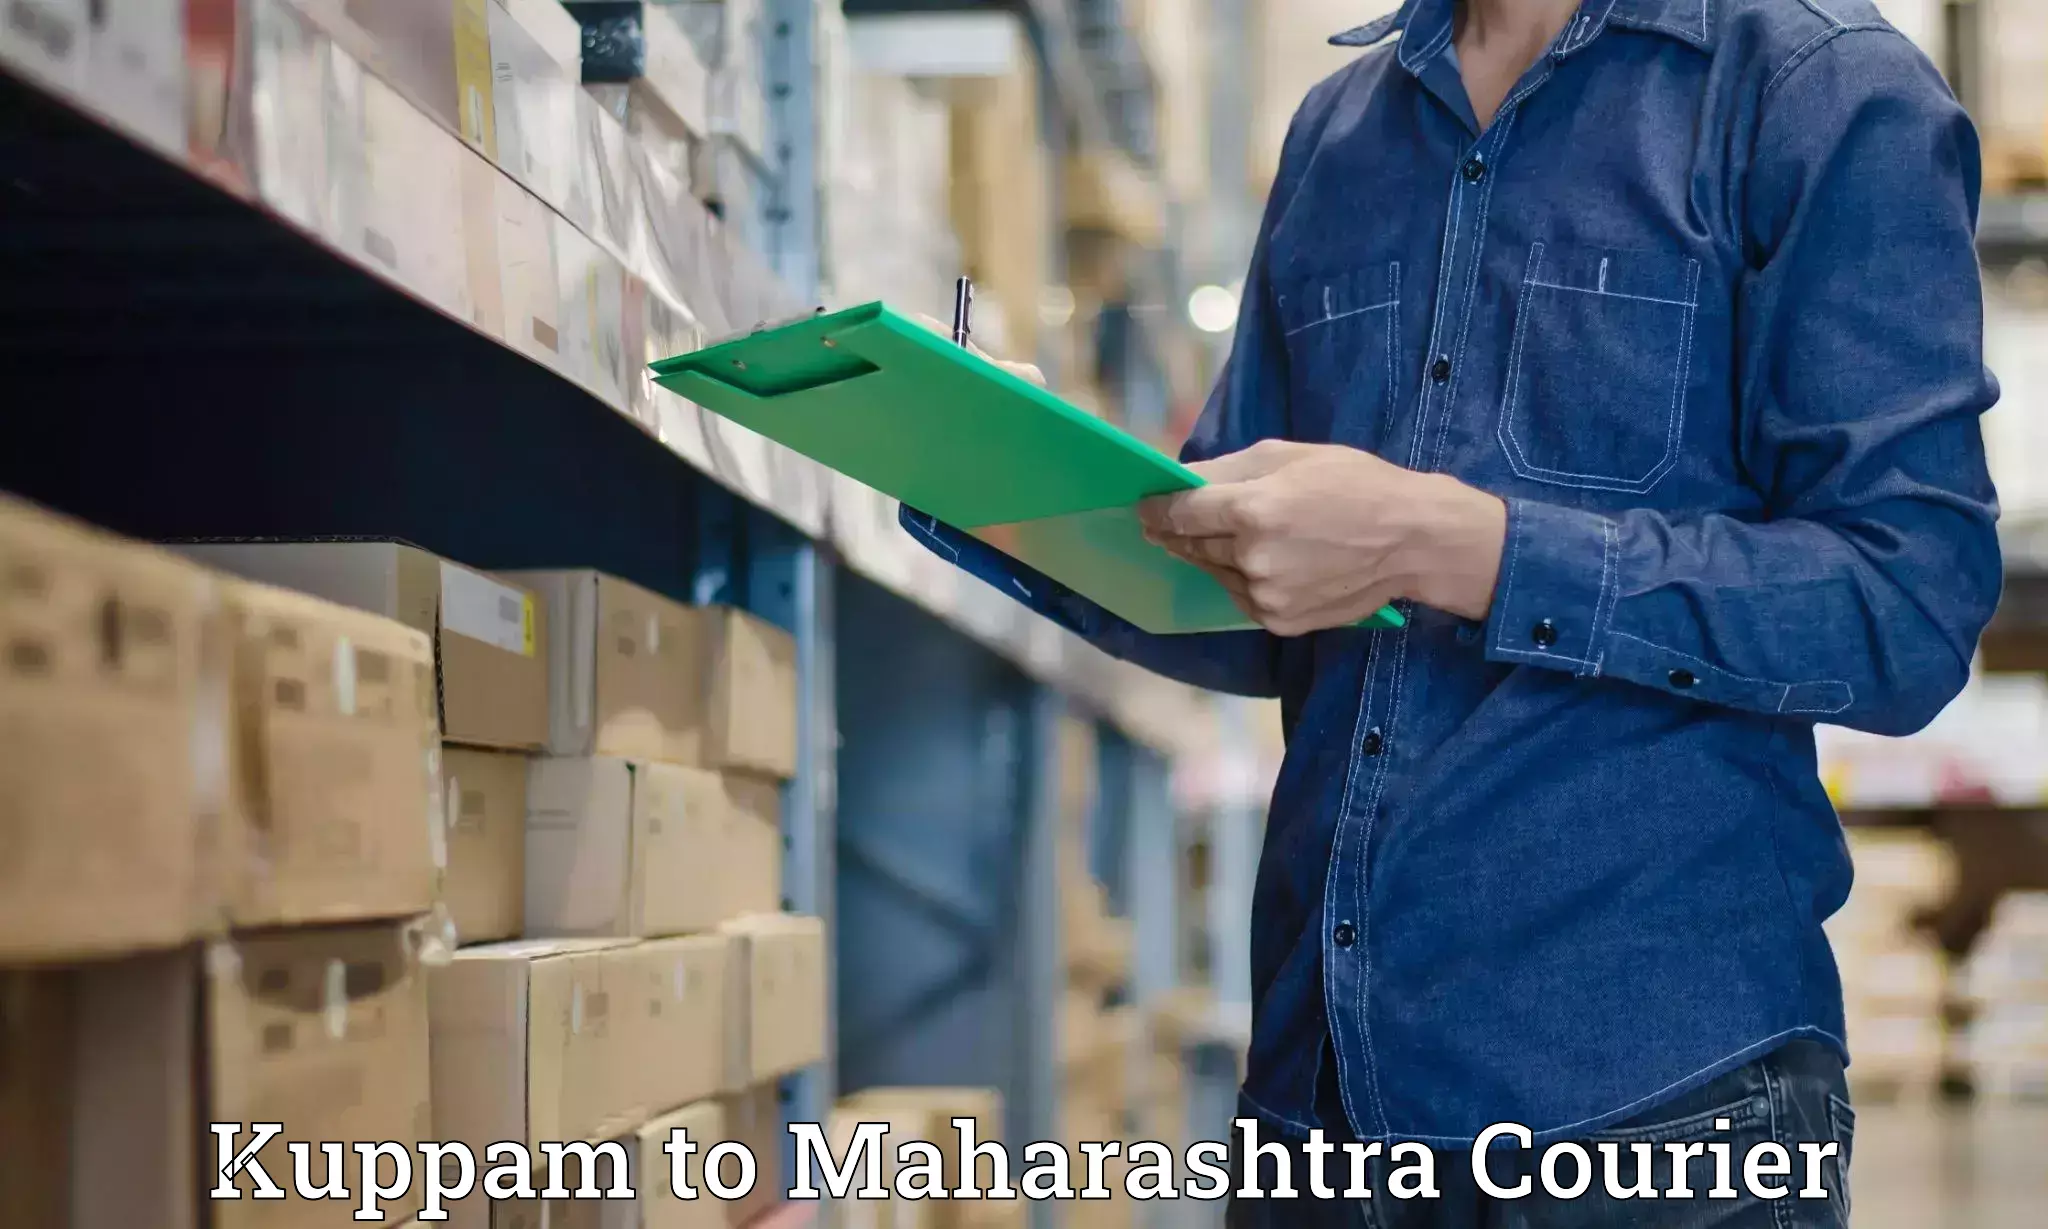 Urban courier service Kuppam to Tata Institute of Social Sciences Mumbai